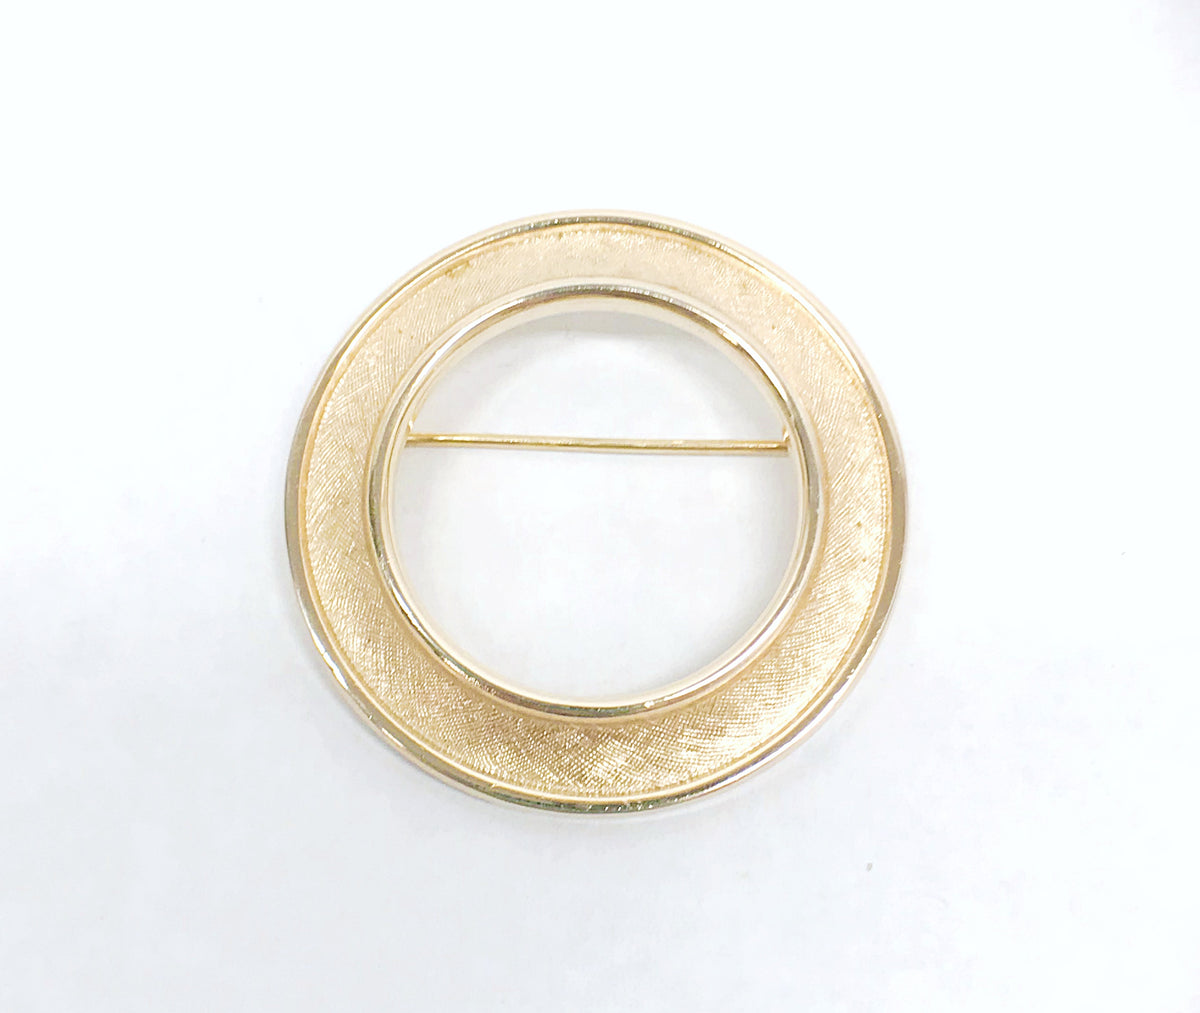 1930's-1955 Crown Trifari Gold Tone Textured Circle Brooch Pin - Hers and His Treasures